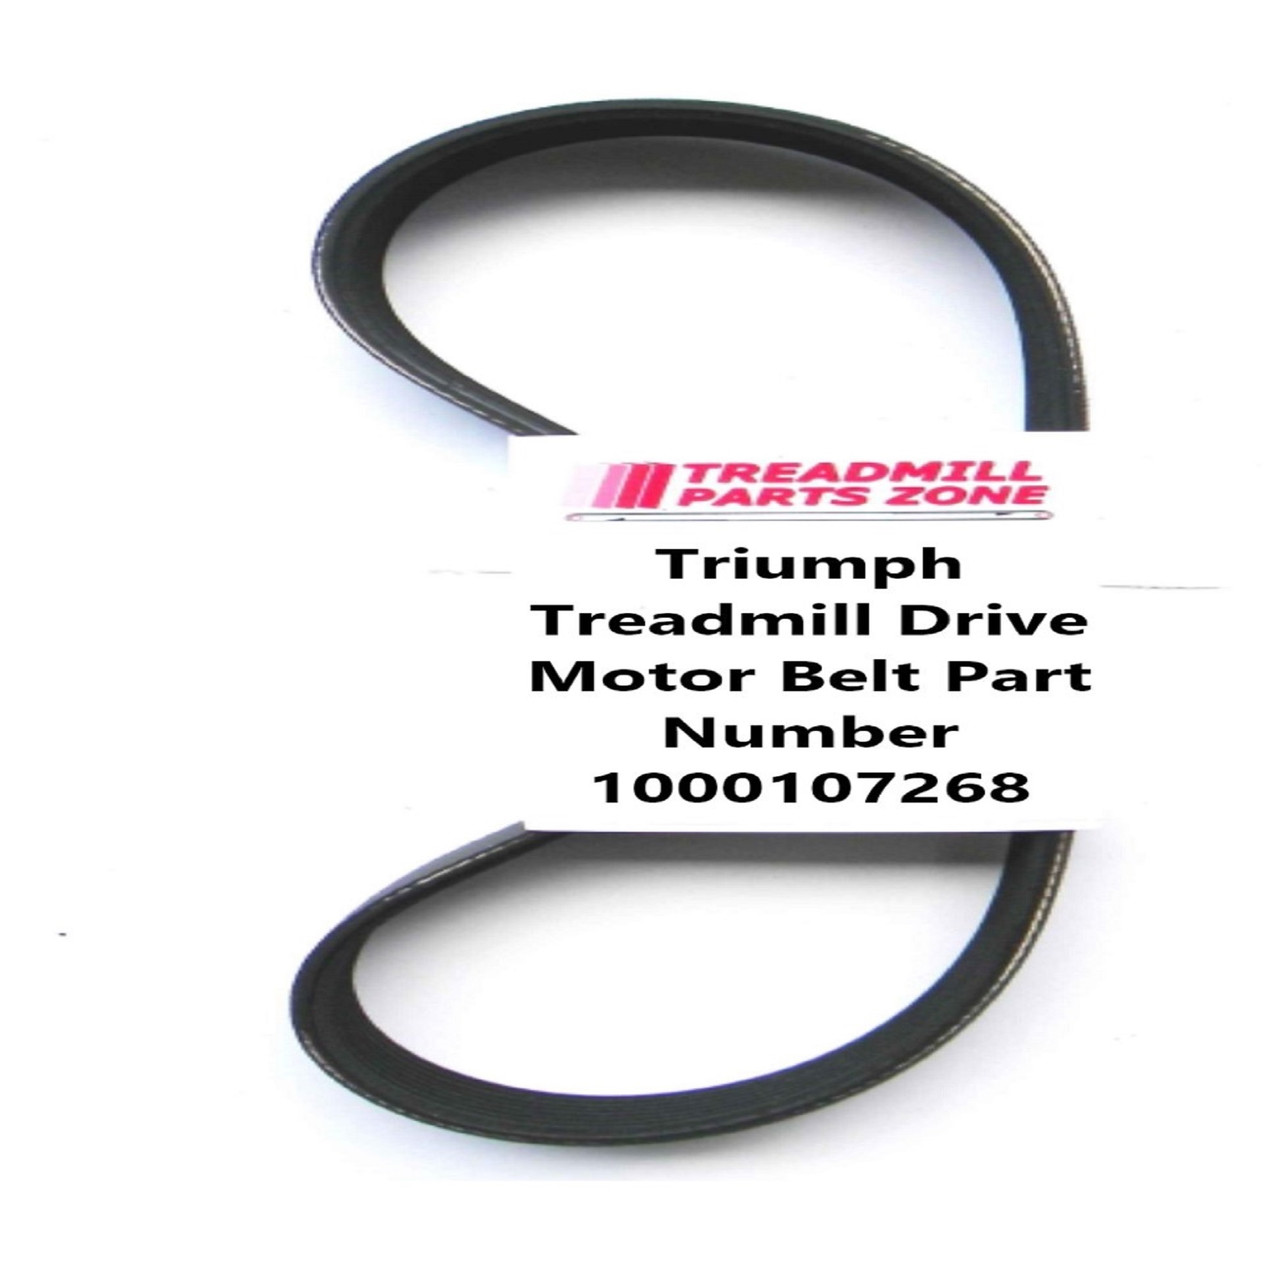 Triumph Treadmill Model 720T TM281 Drive Motor Belt Part Number 1000107268